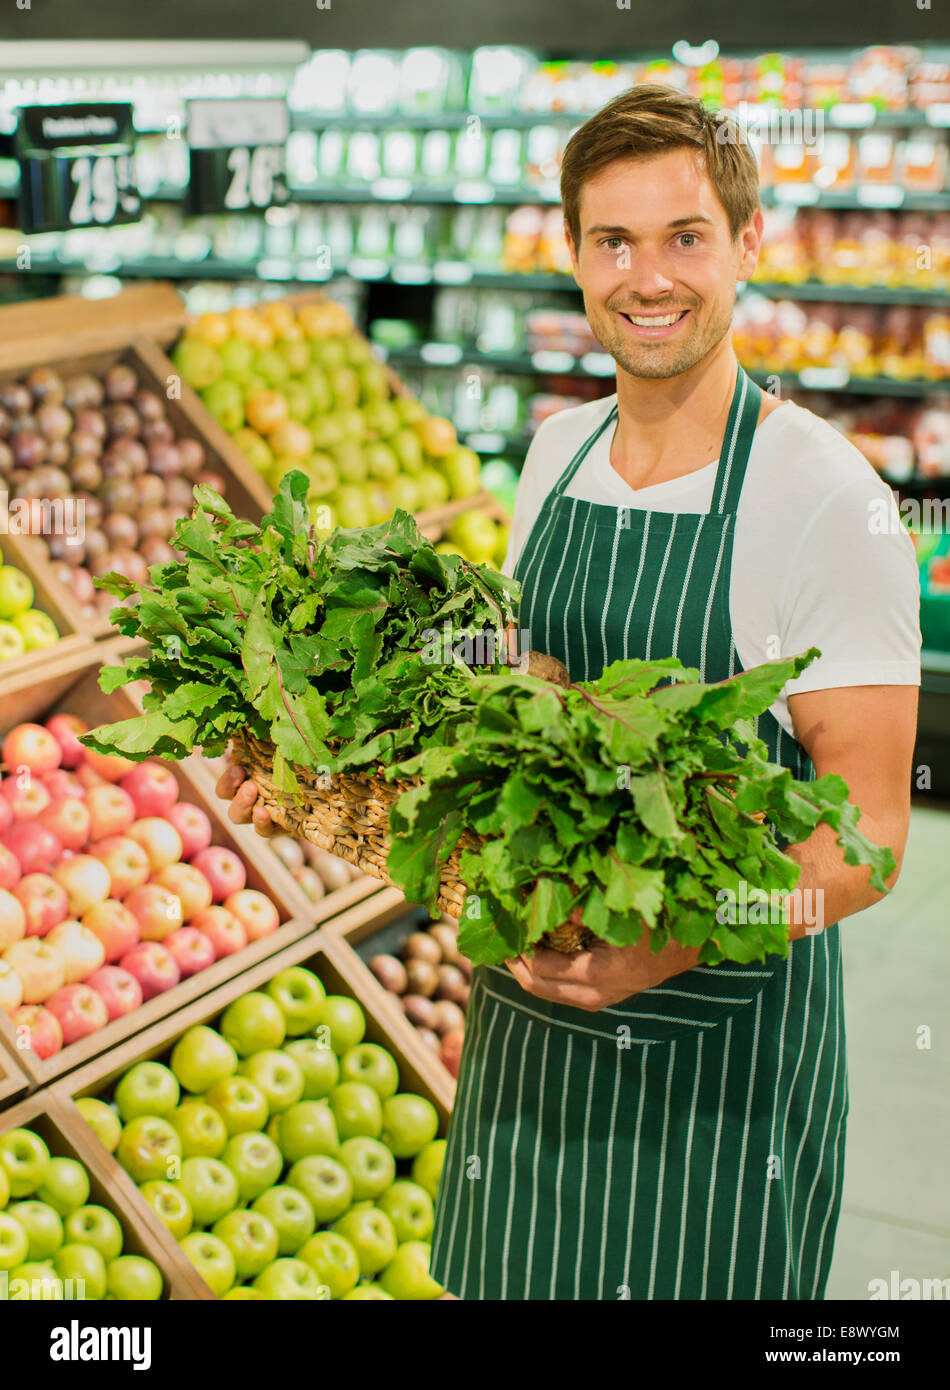 https://c8.alamy.com/comp/E8WYGM/clerk-carrying-basket-of-produce-in-grocery-store-E8WYGM.jpg